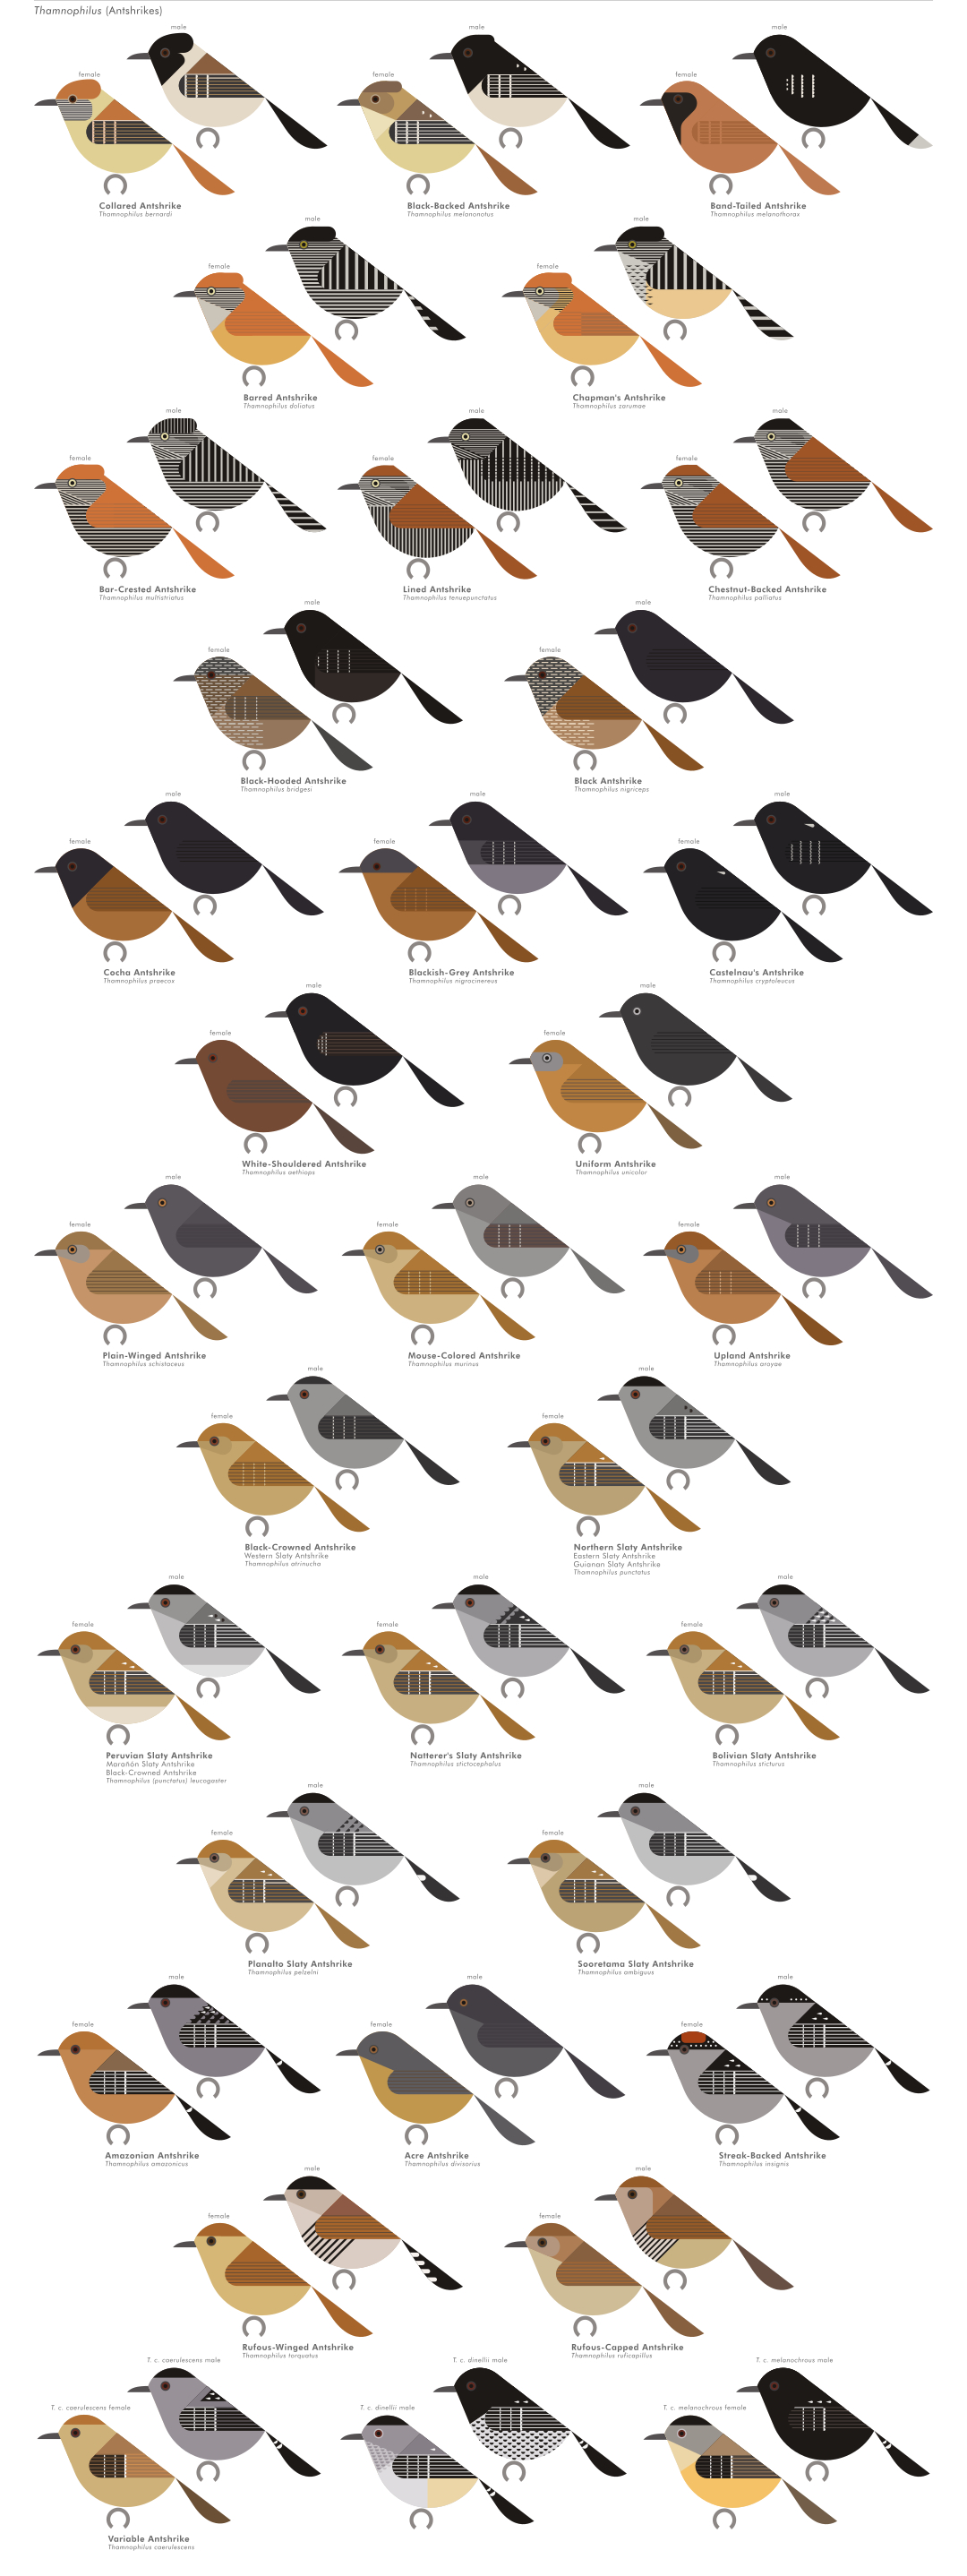 scott partridge - AVE - avian vector encyclopedia - antshrikes - bird vector art